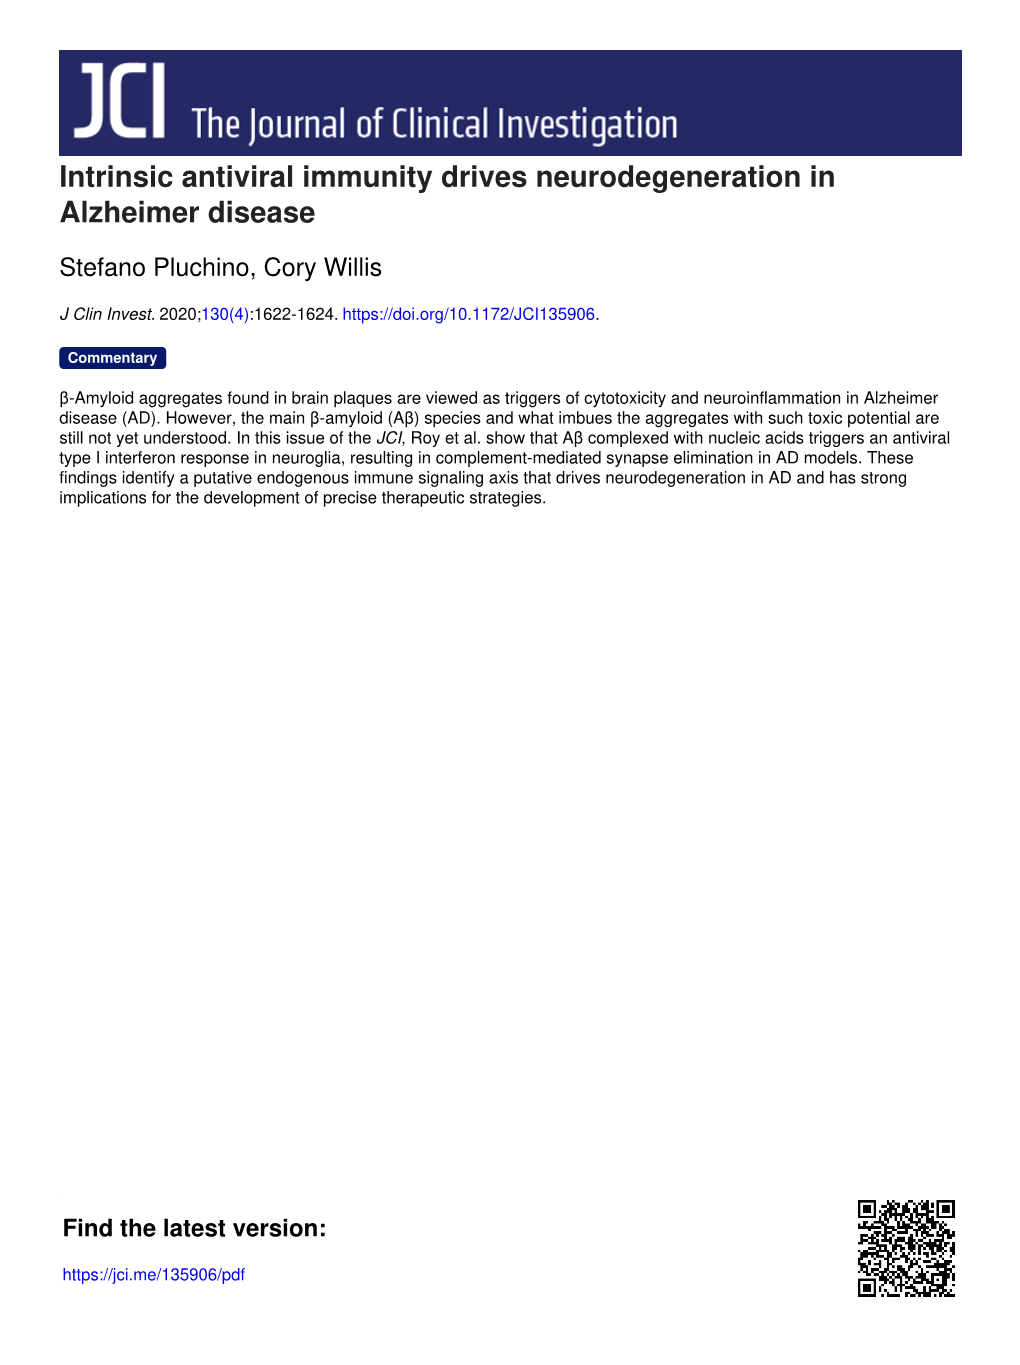 Intrinsic Antiviral Immunity Drives Neurodegeneration in Alzheimer Disease